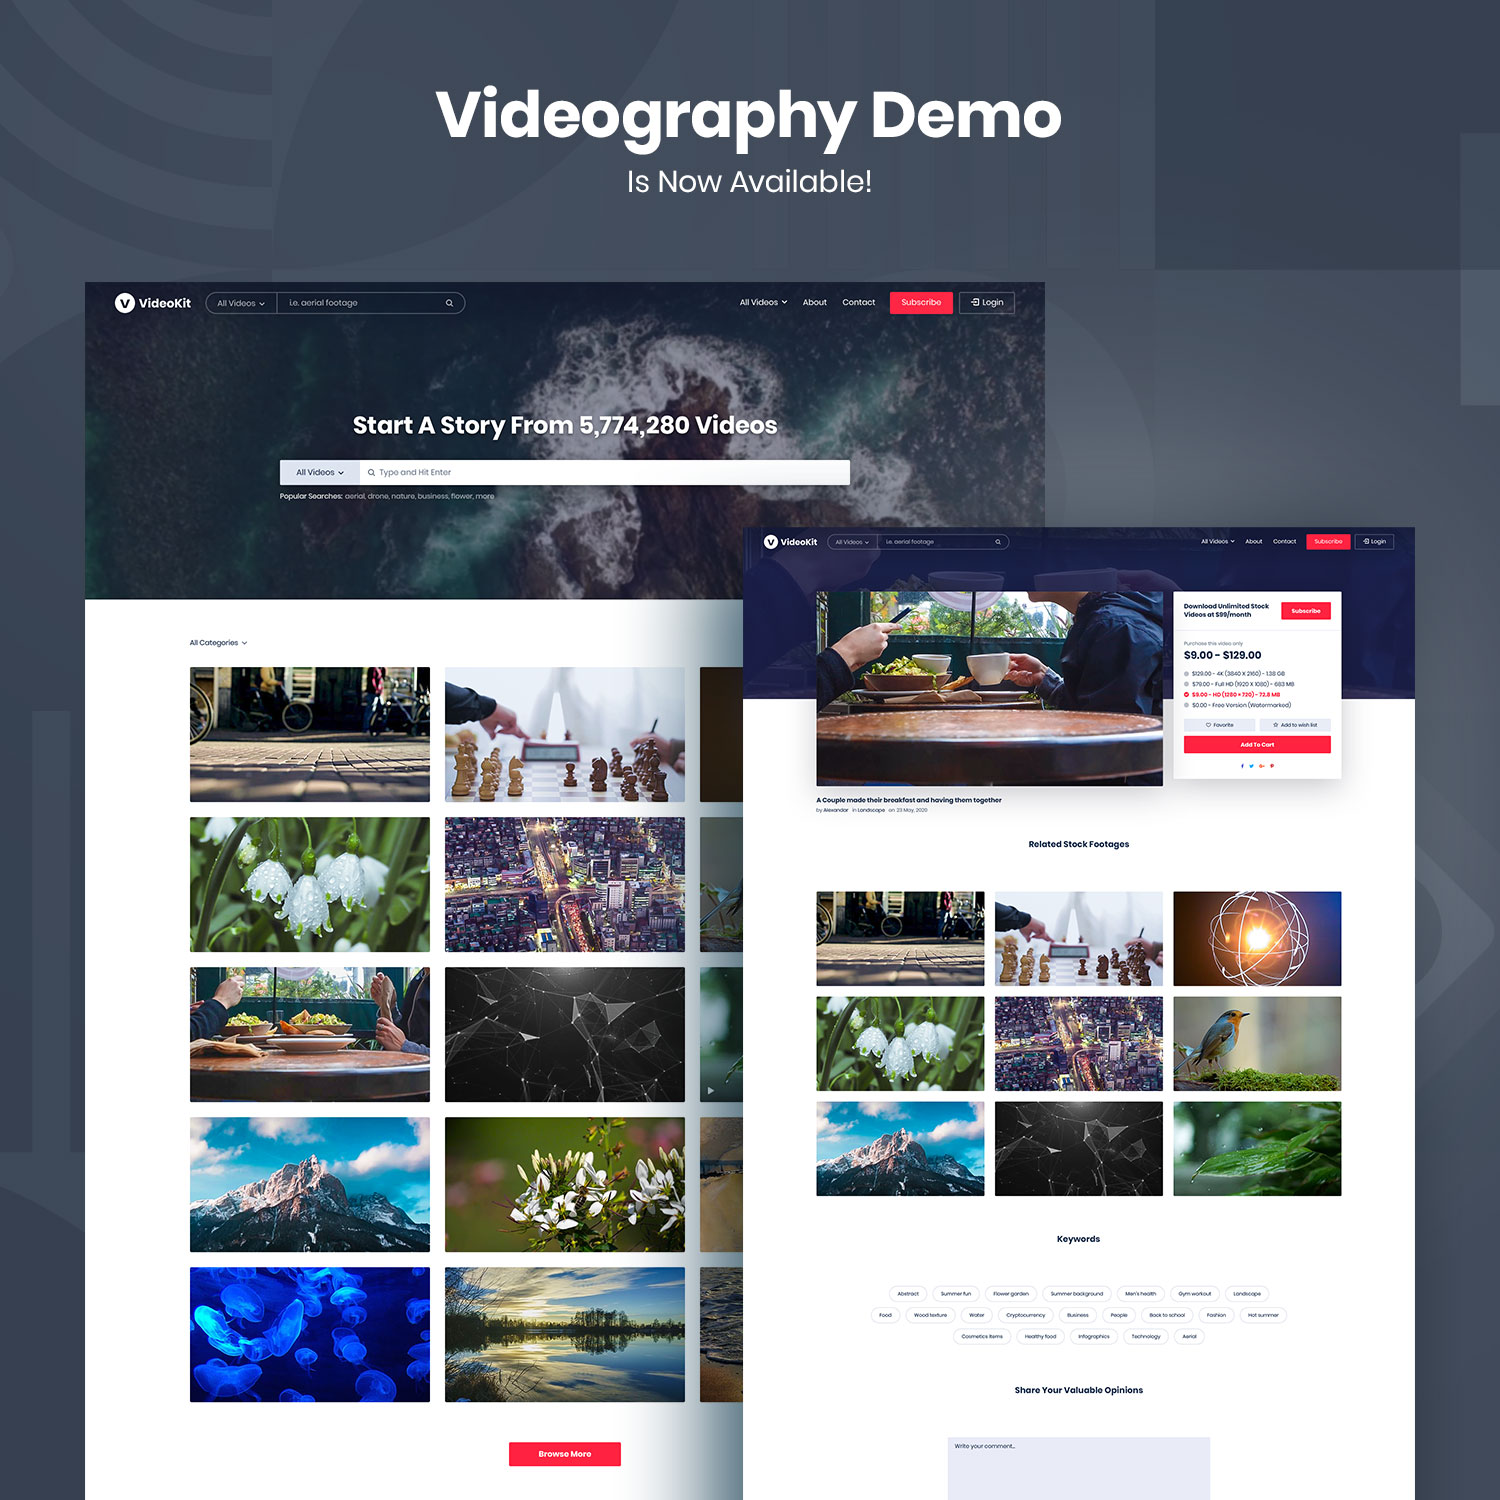 videography demo banner - Mayosis - Digital Marketplace WordPress Theme